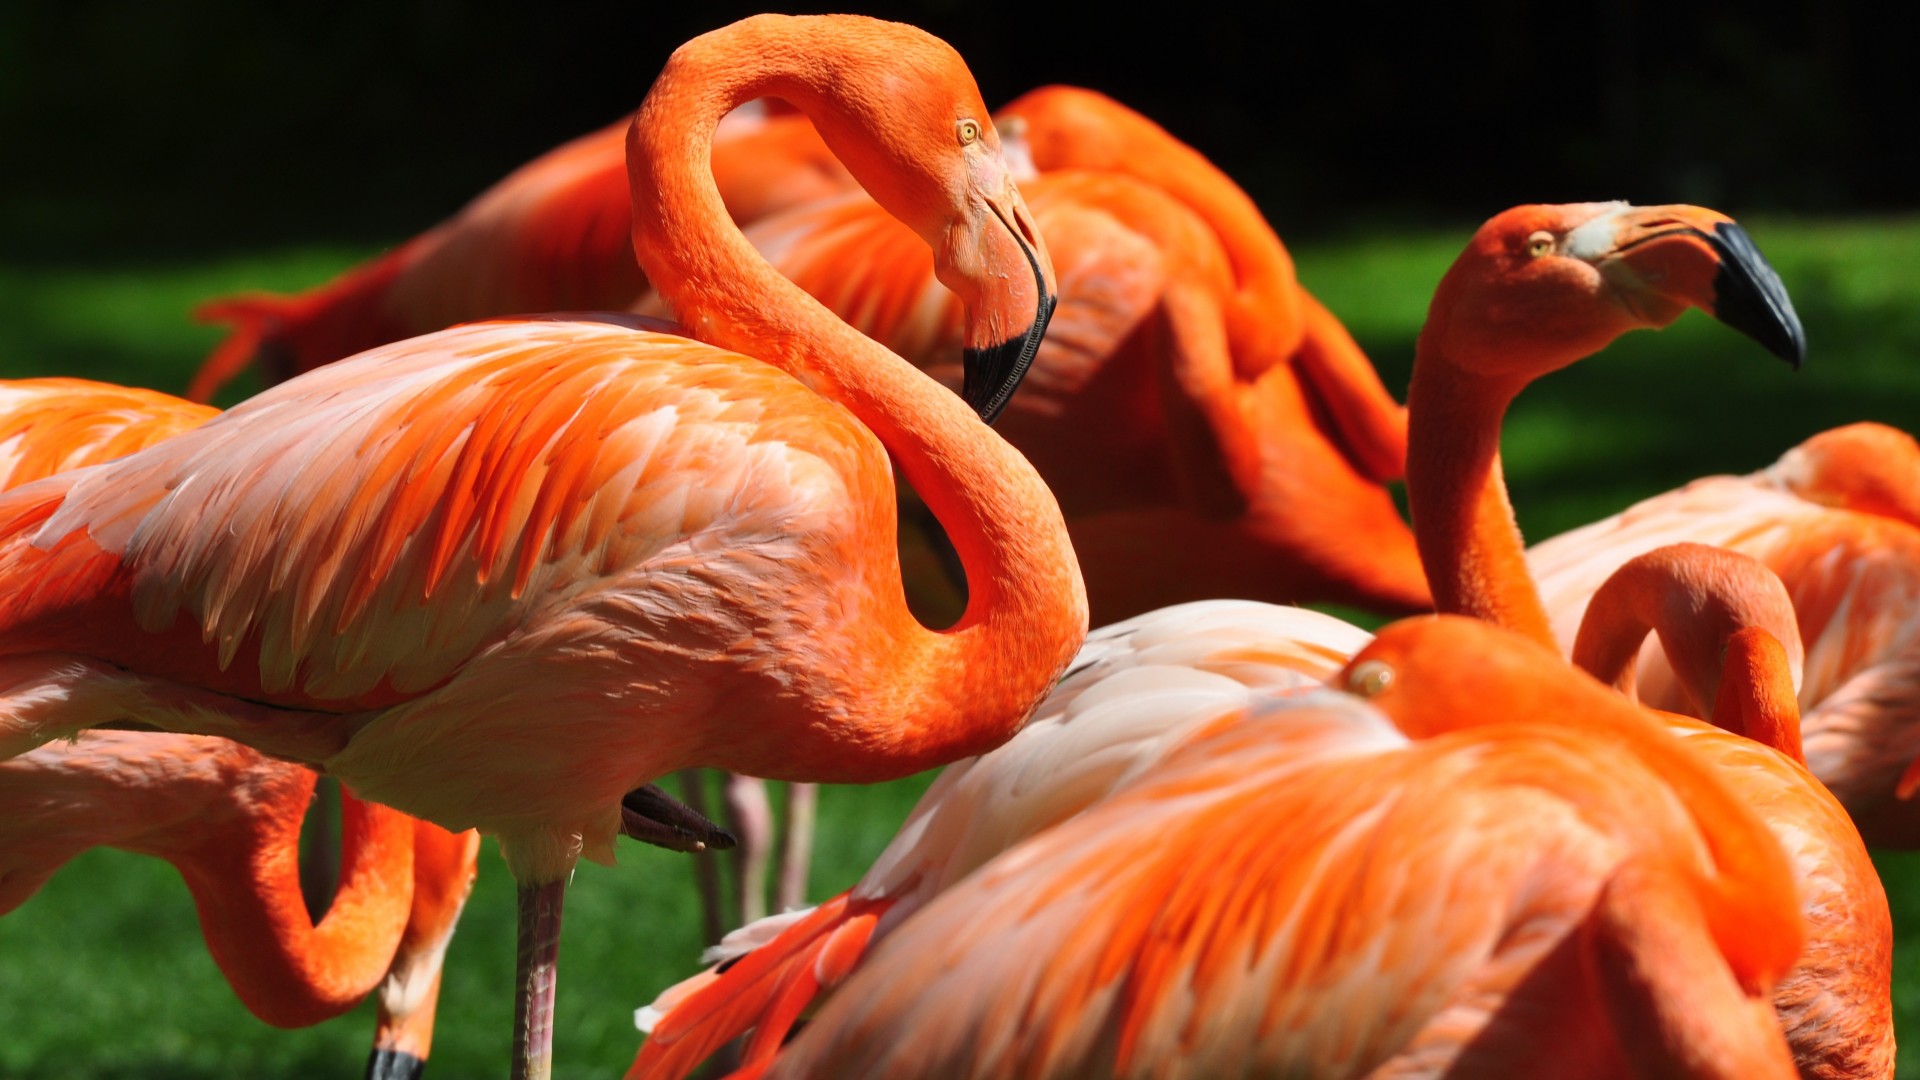 фламинго, сан диего, зоопарк, птица, красные, перья, туризм, Flamingo, Sun Diego, zoo, bird, red, plumage, tourism, green grass, tourism (horizontal)